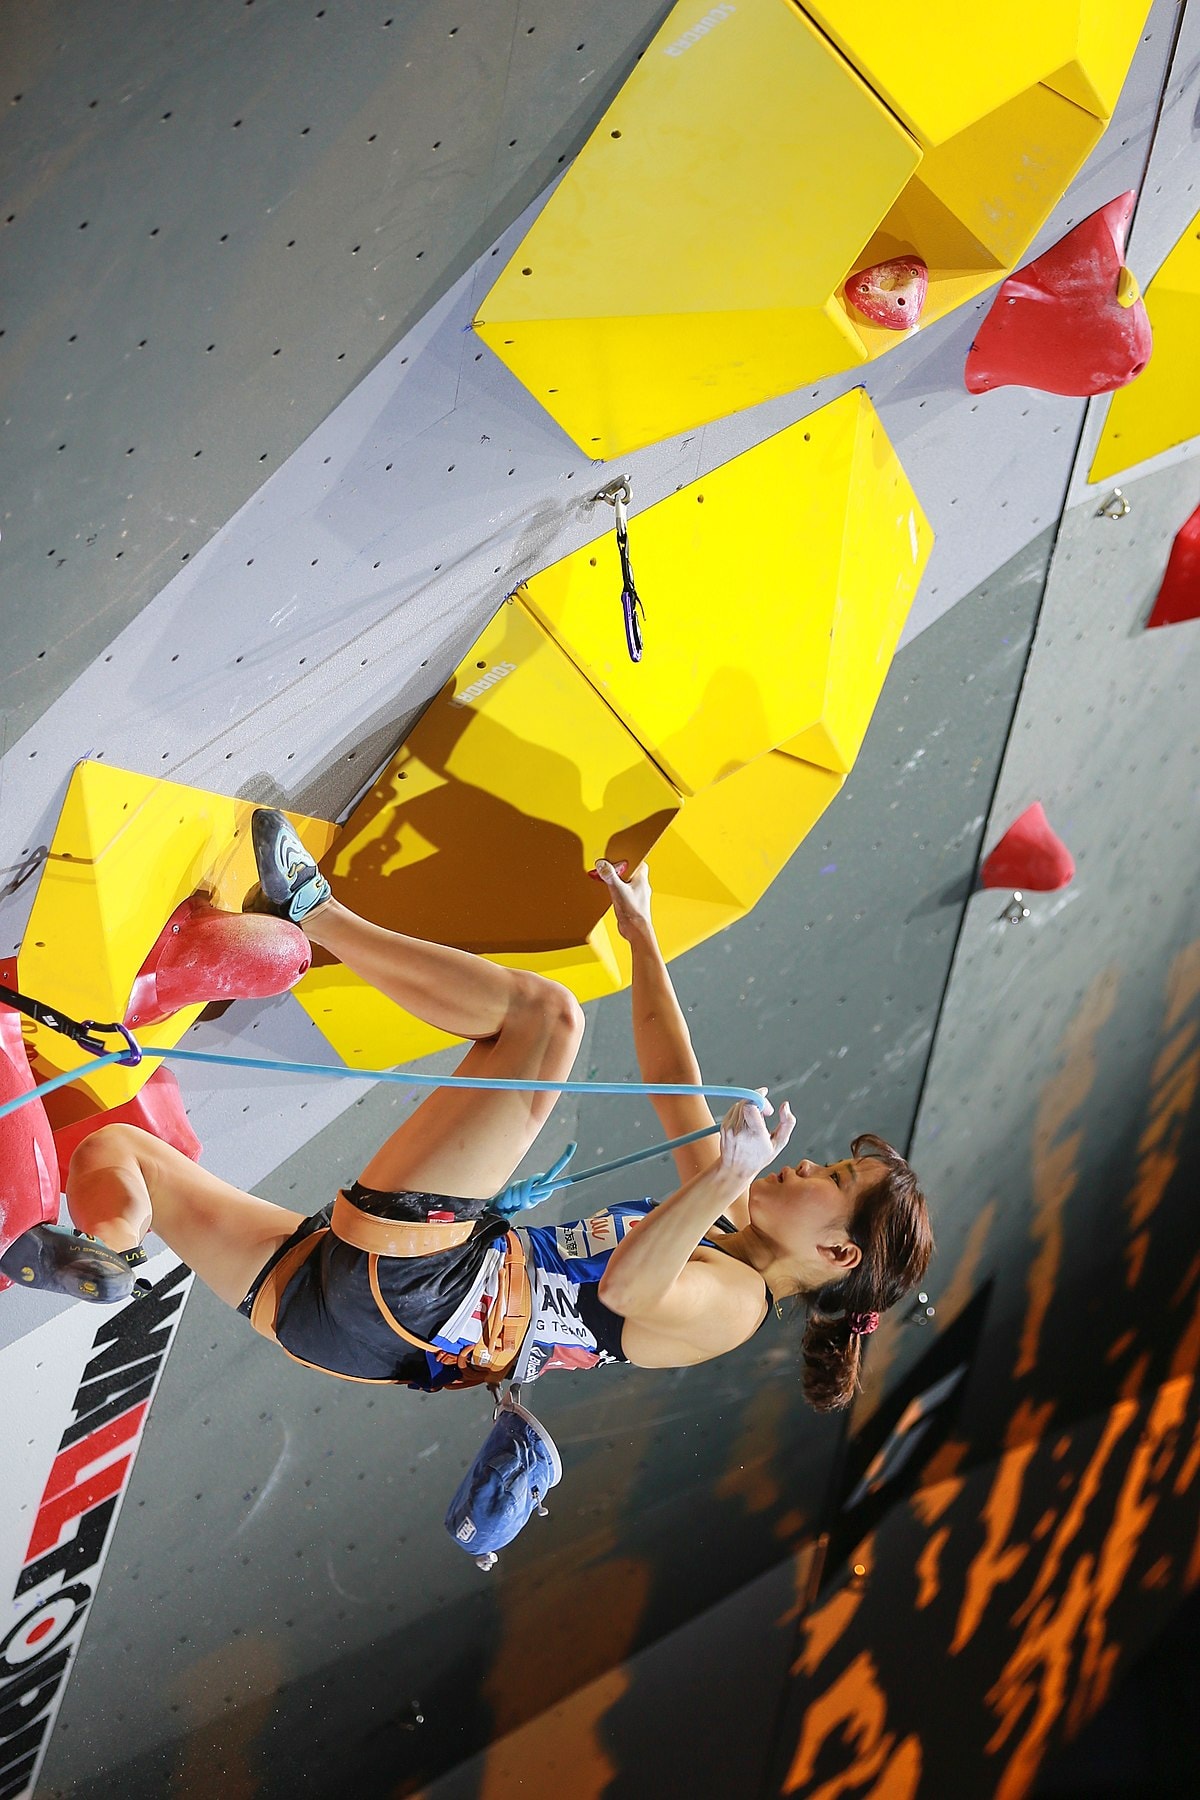 new events tokyo olympics - lead climbing